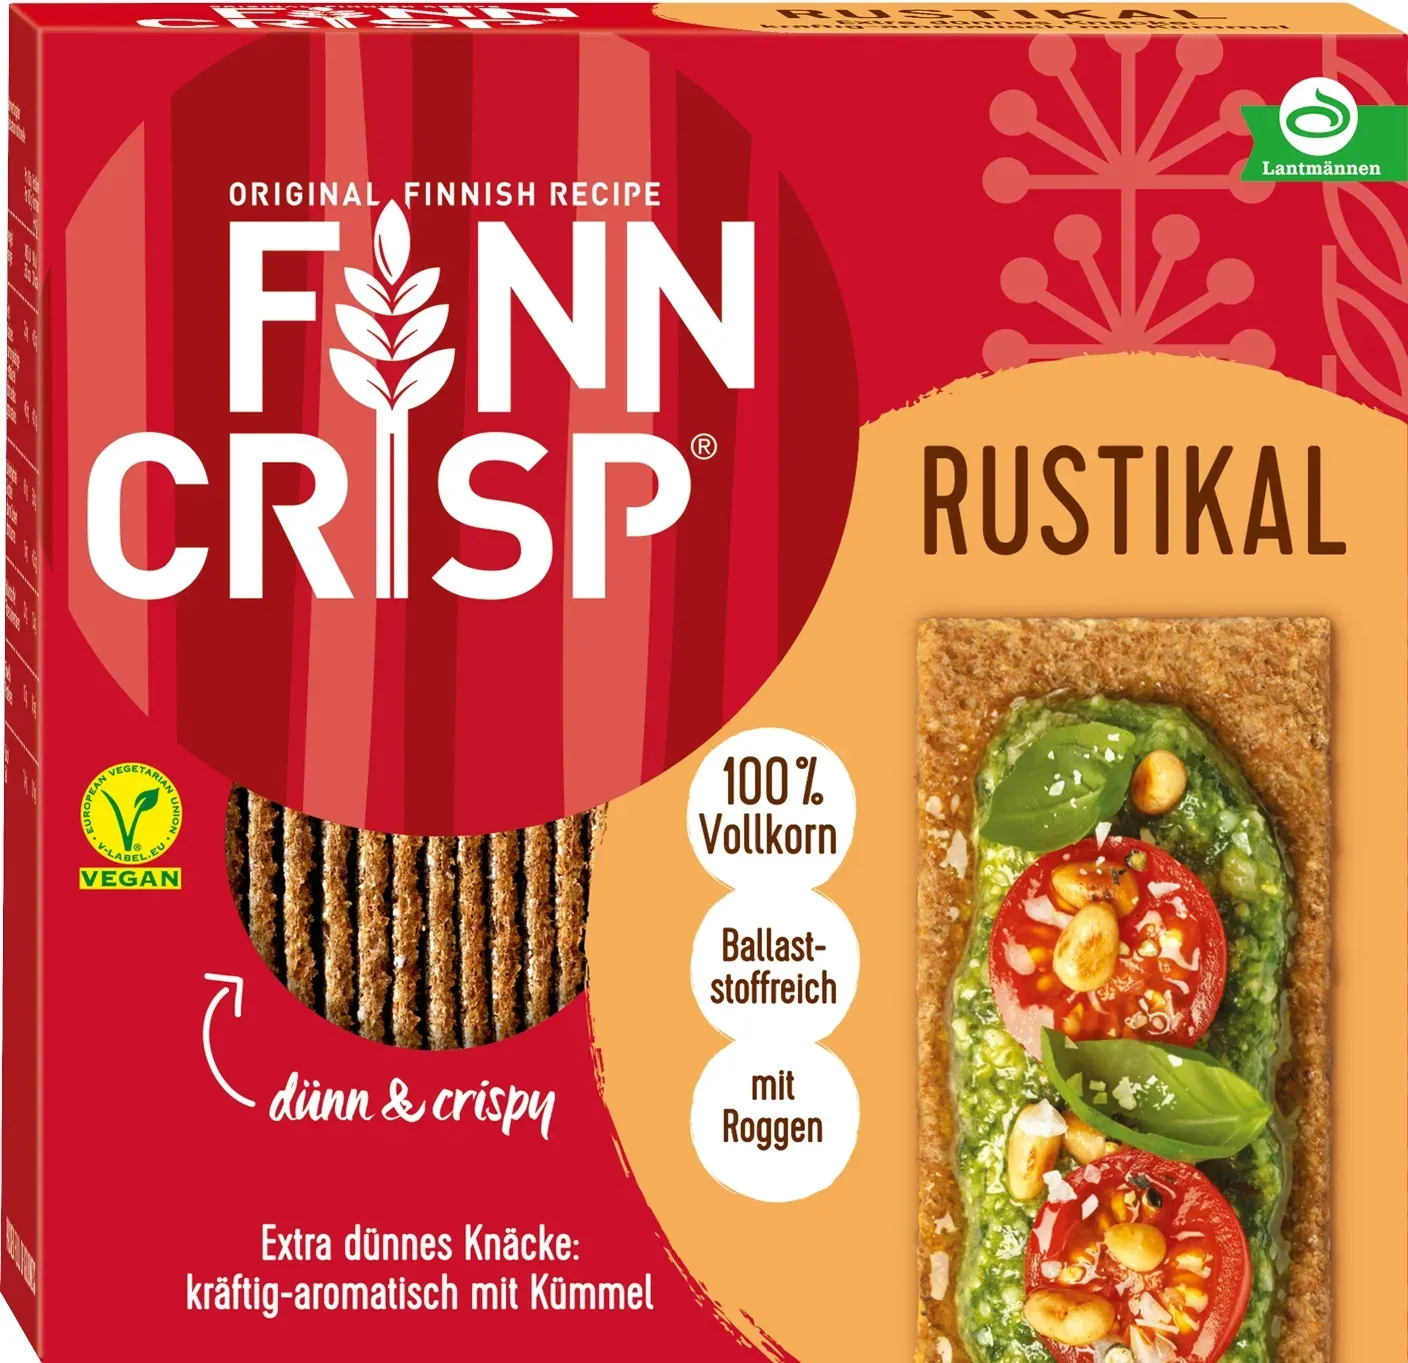 Finn Crisp Rustikal 200g